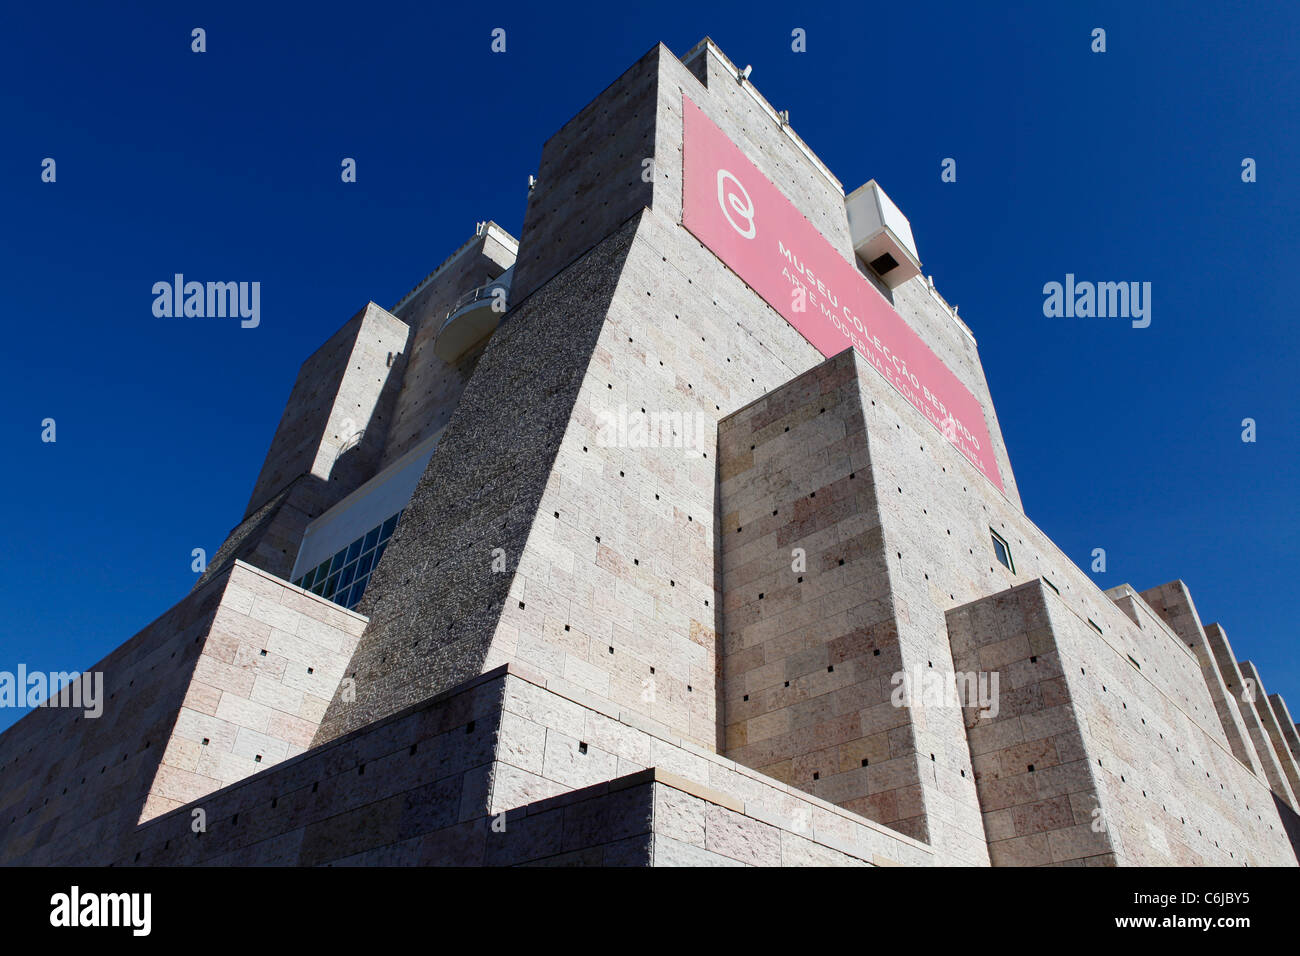 The facade of the Museu Coleccao Berardo (Berardo Museum) which houses modern and contemporary art in Lisbon, Portugal. Stock Photo